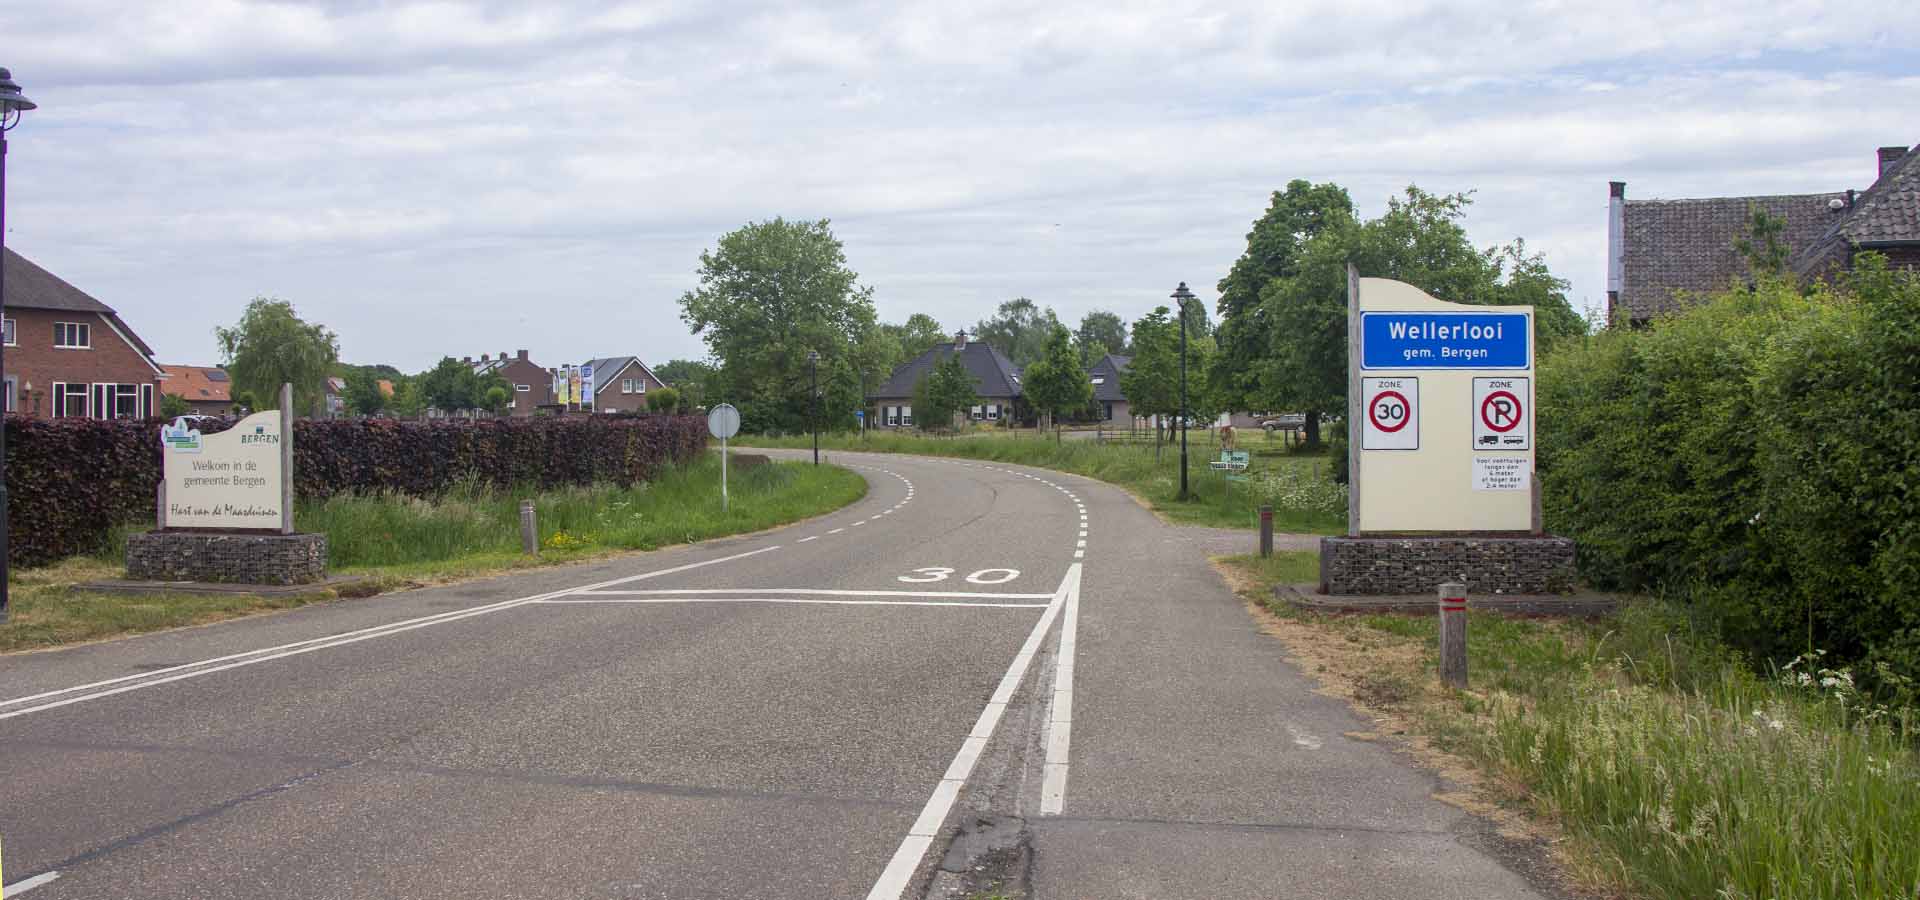 Wellerlooi dorp